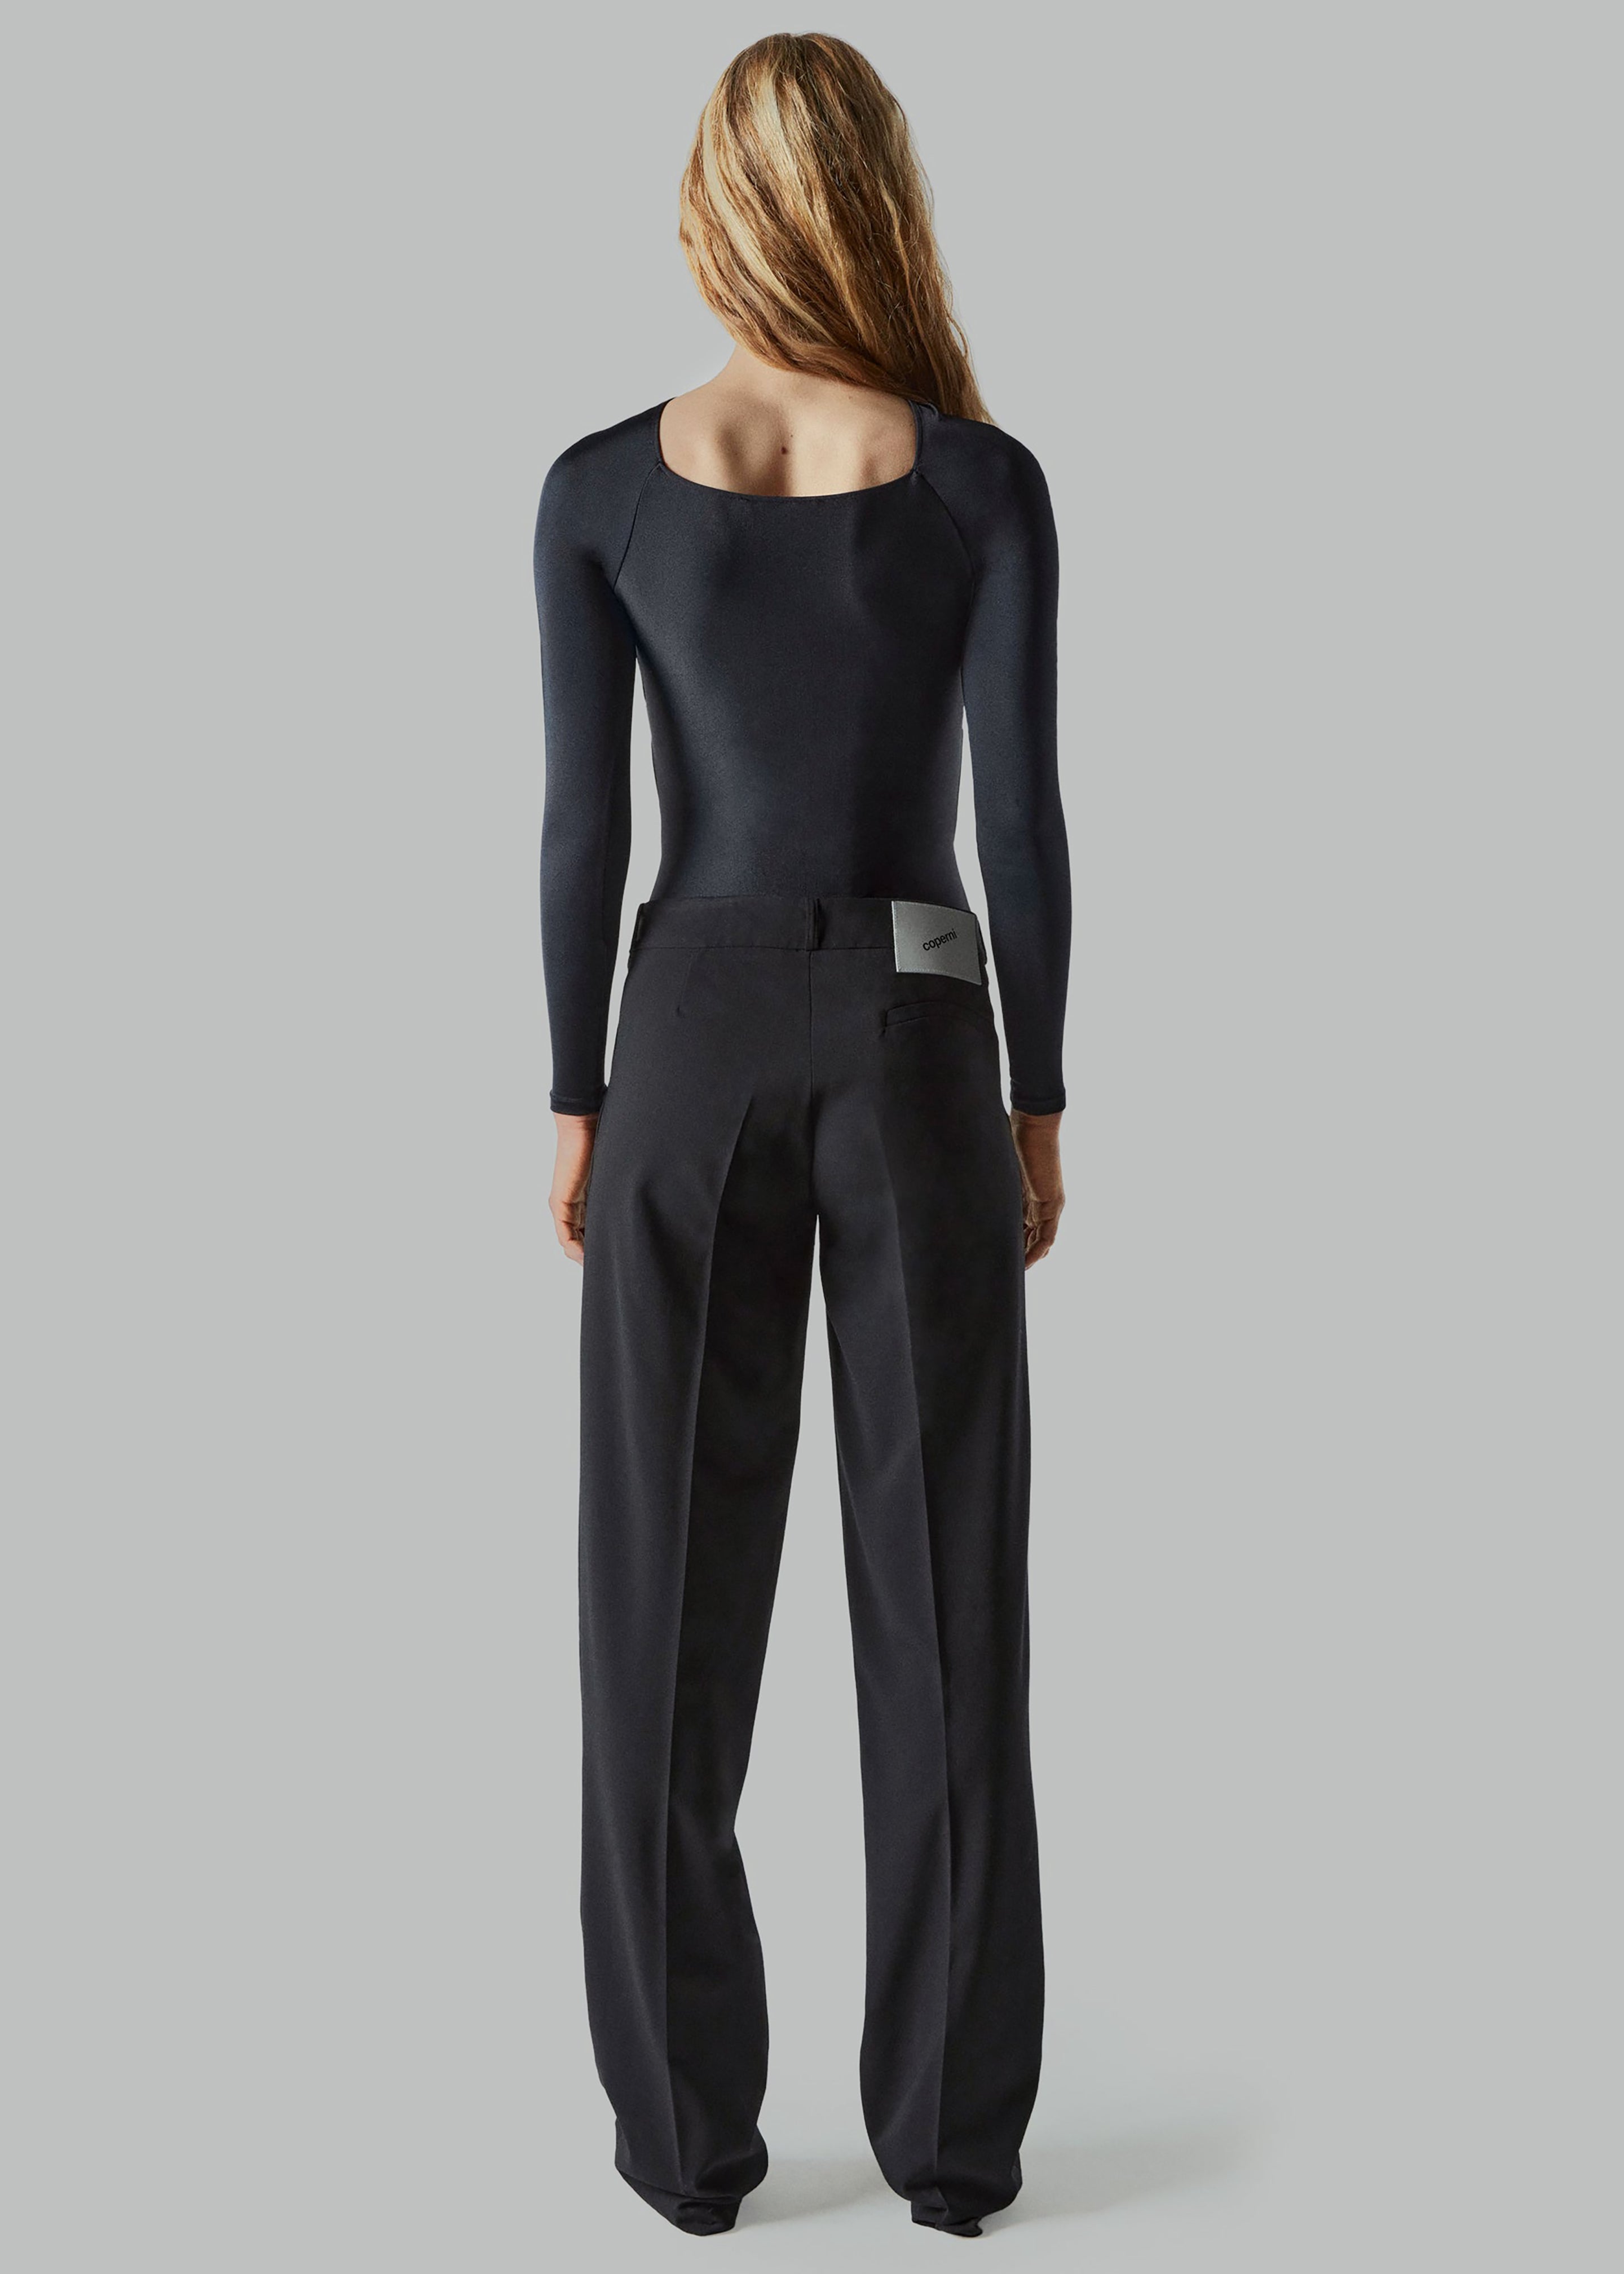 Coperni Cut-Out Jersey Bodysuit - Black - 6